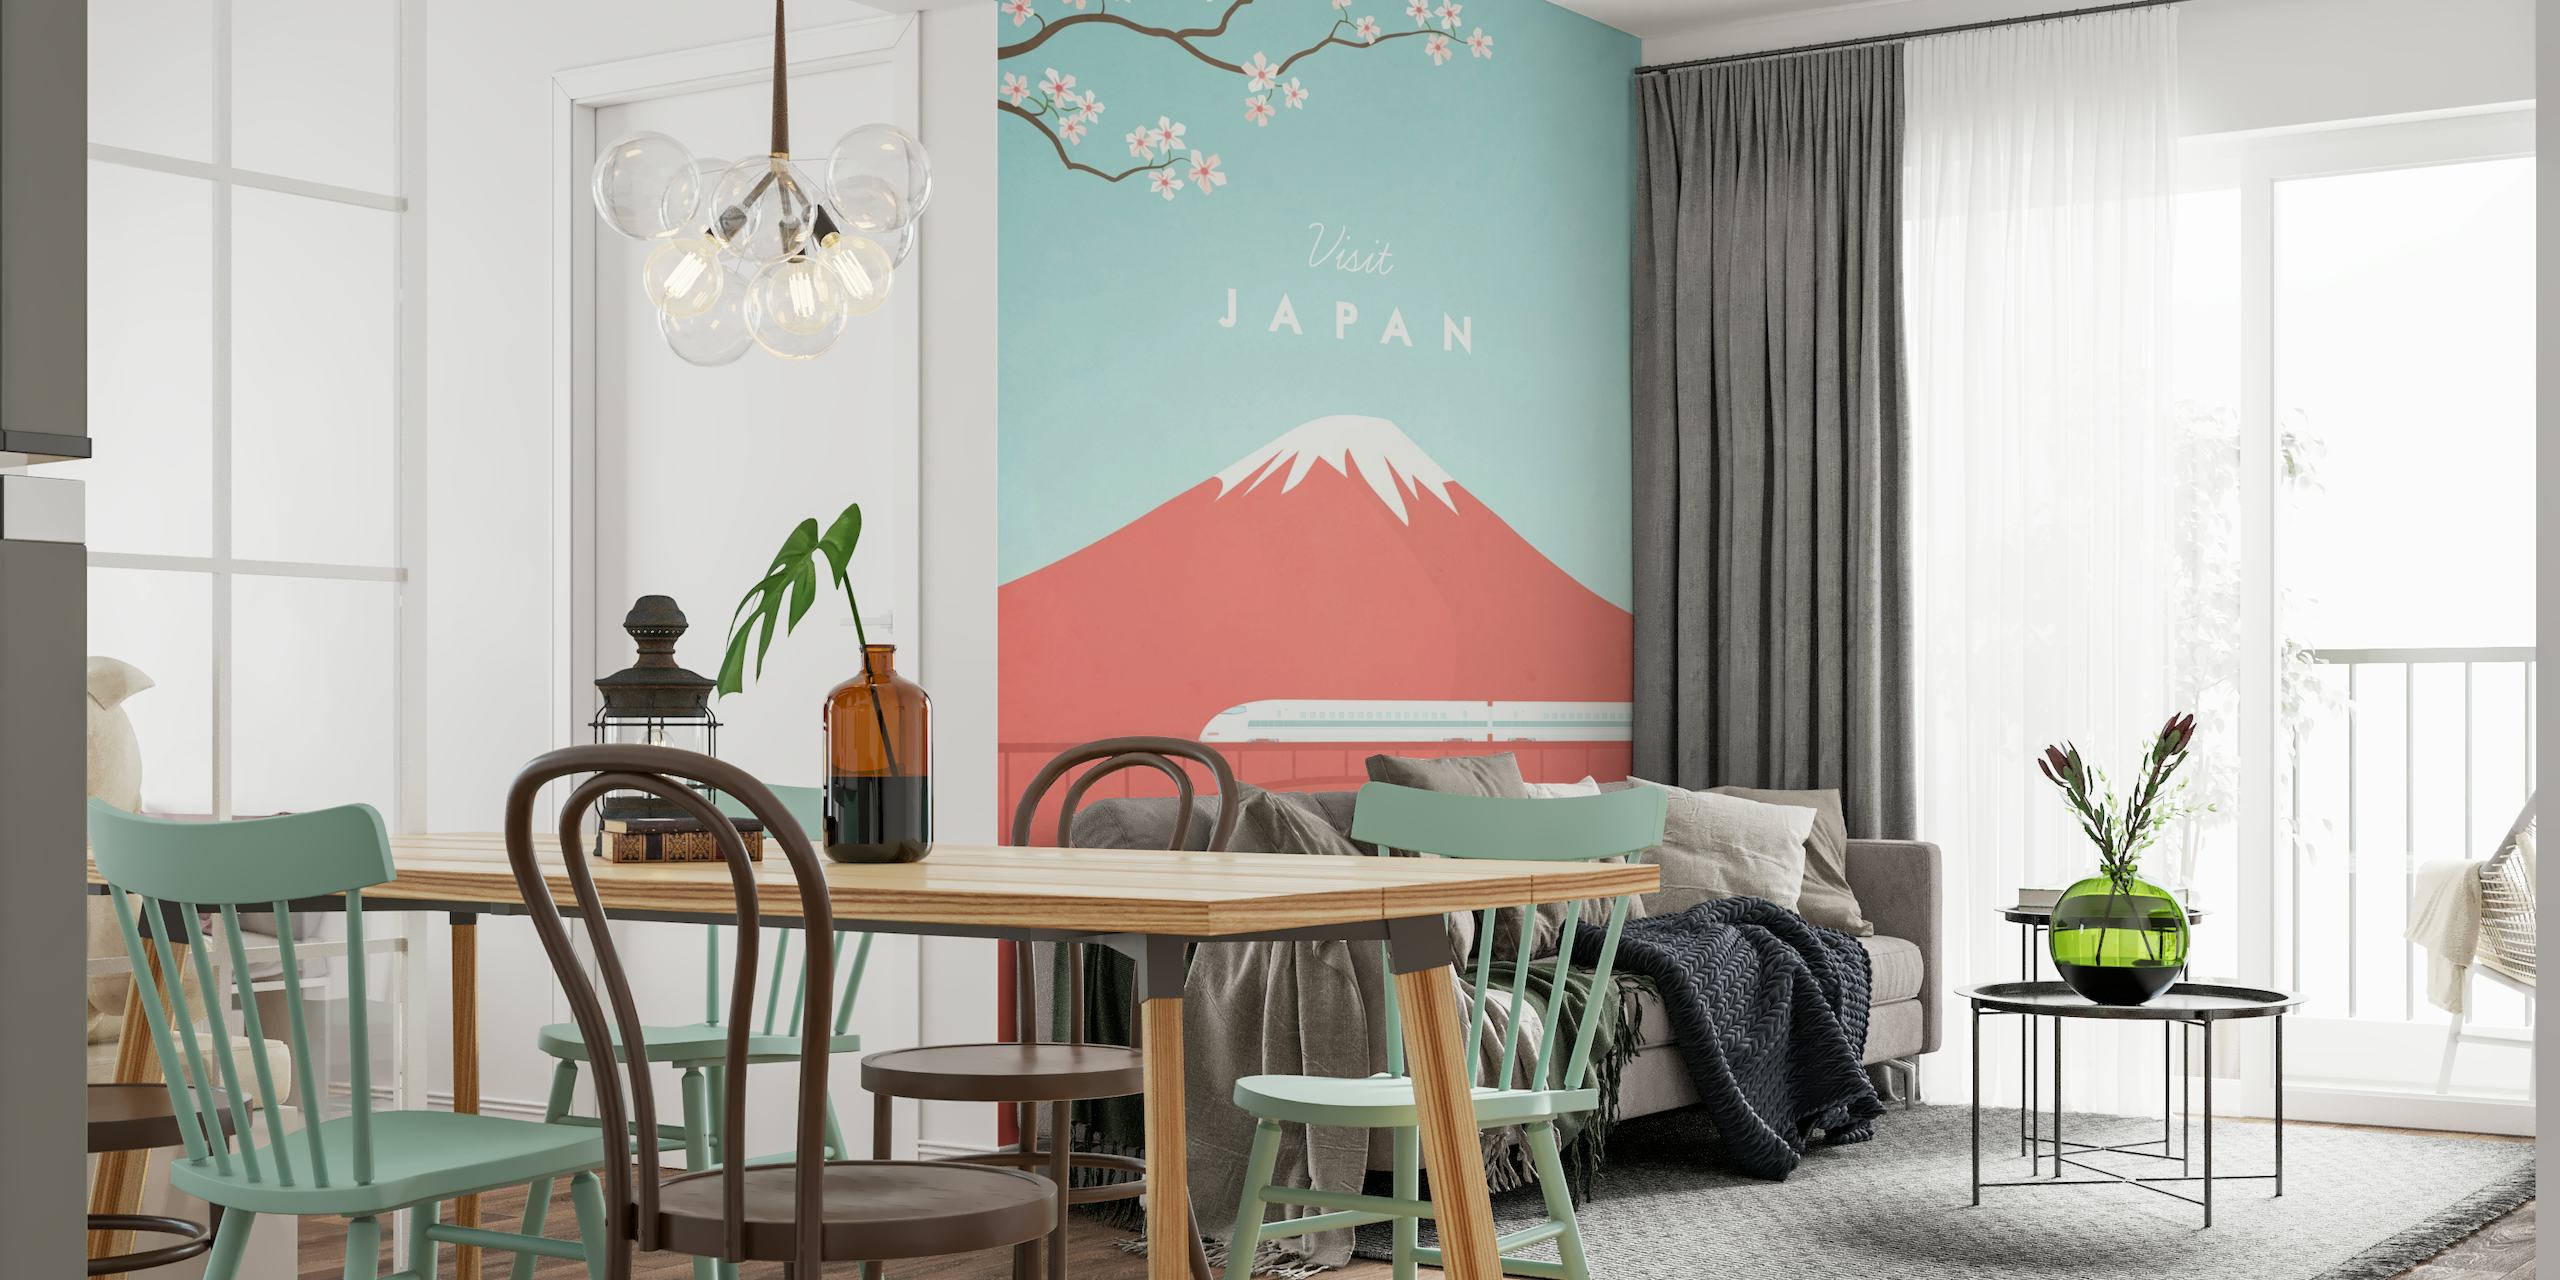 Japan Travel Poster papel pintado